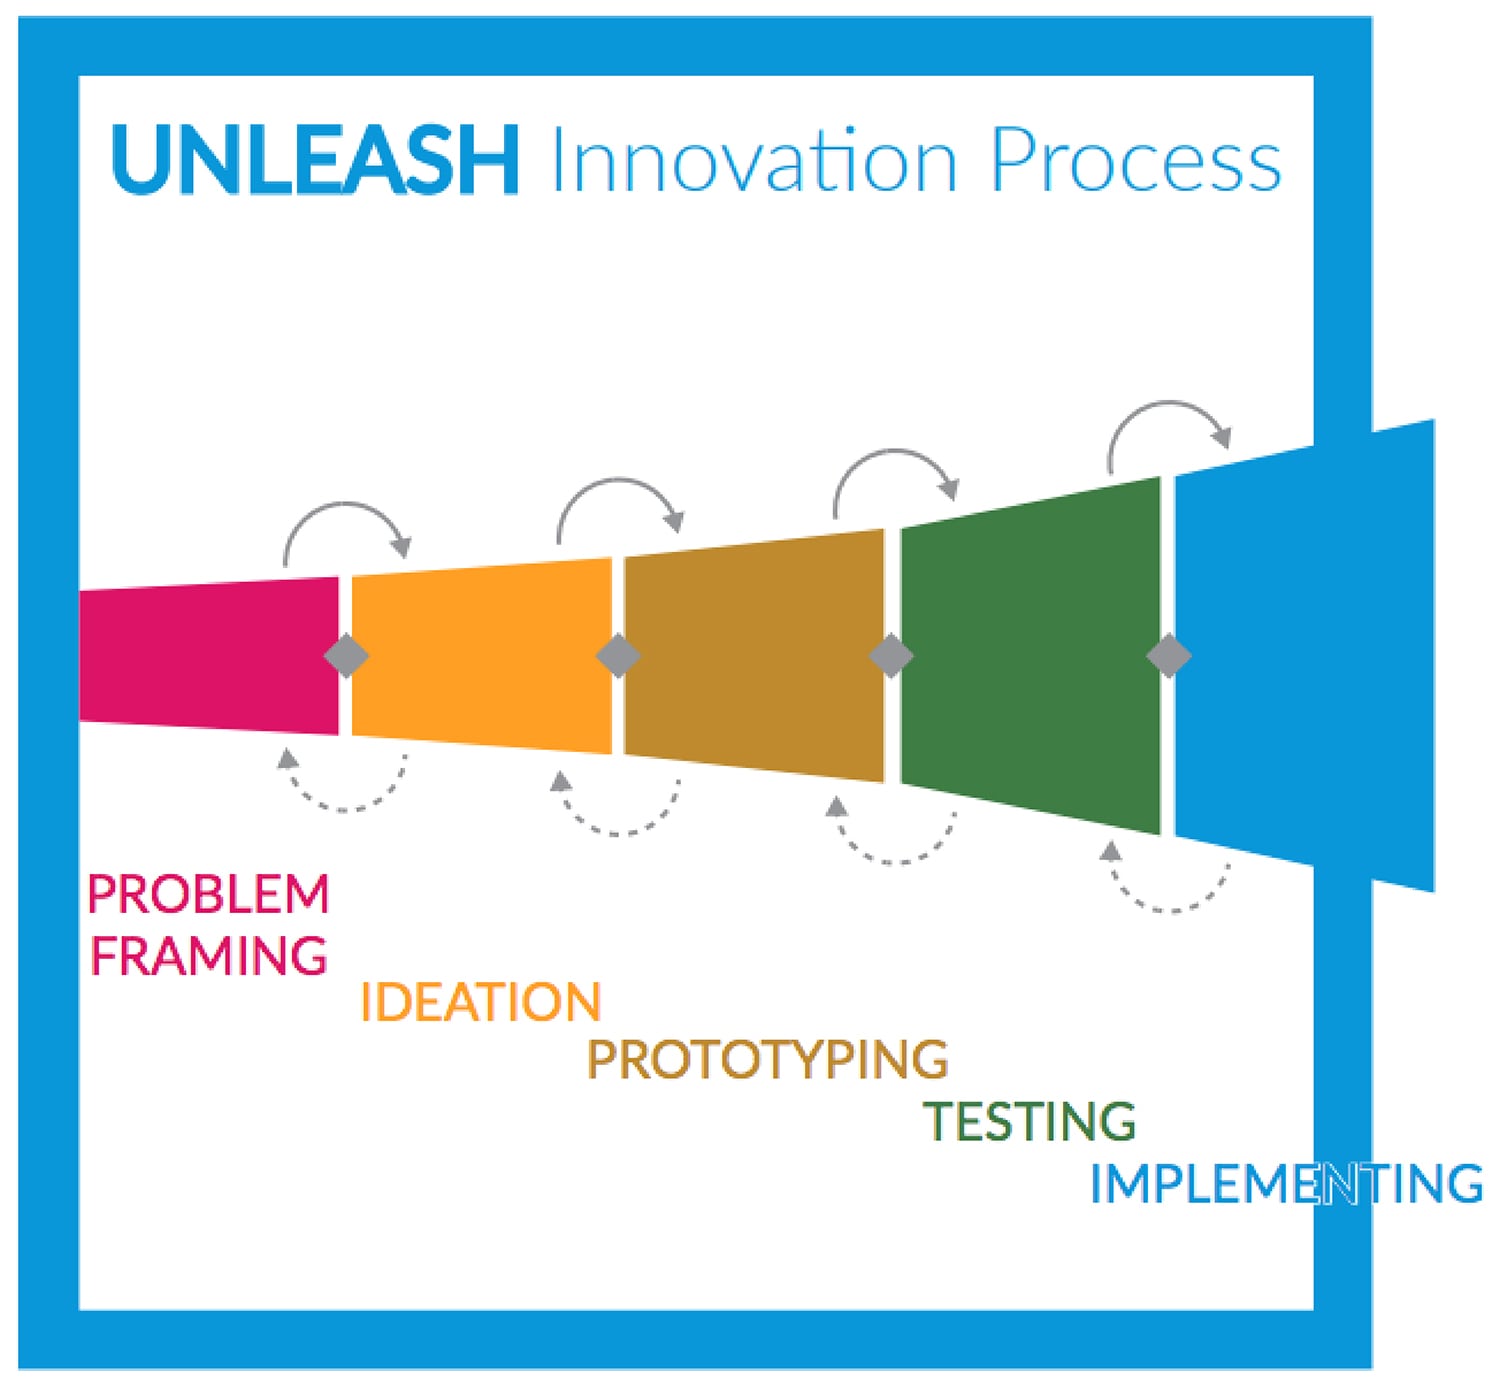 Innovation Process